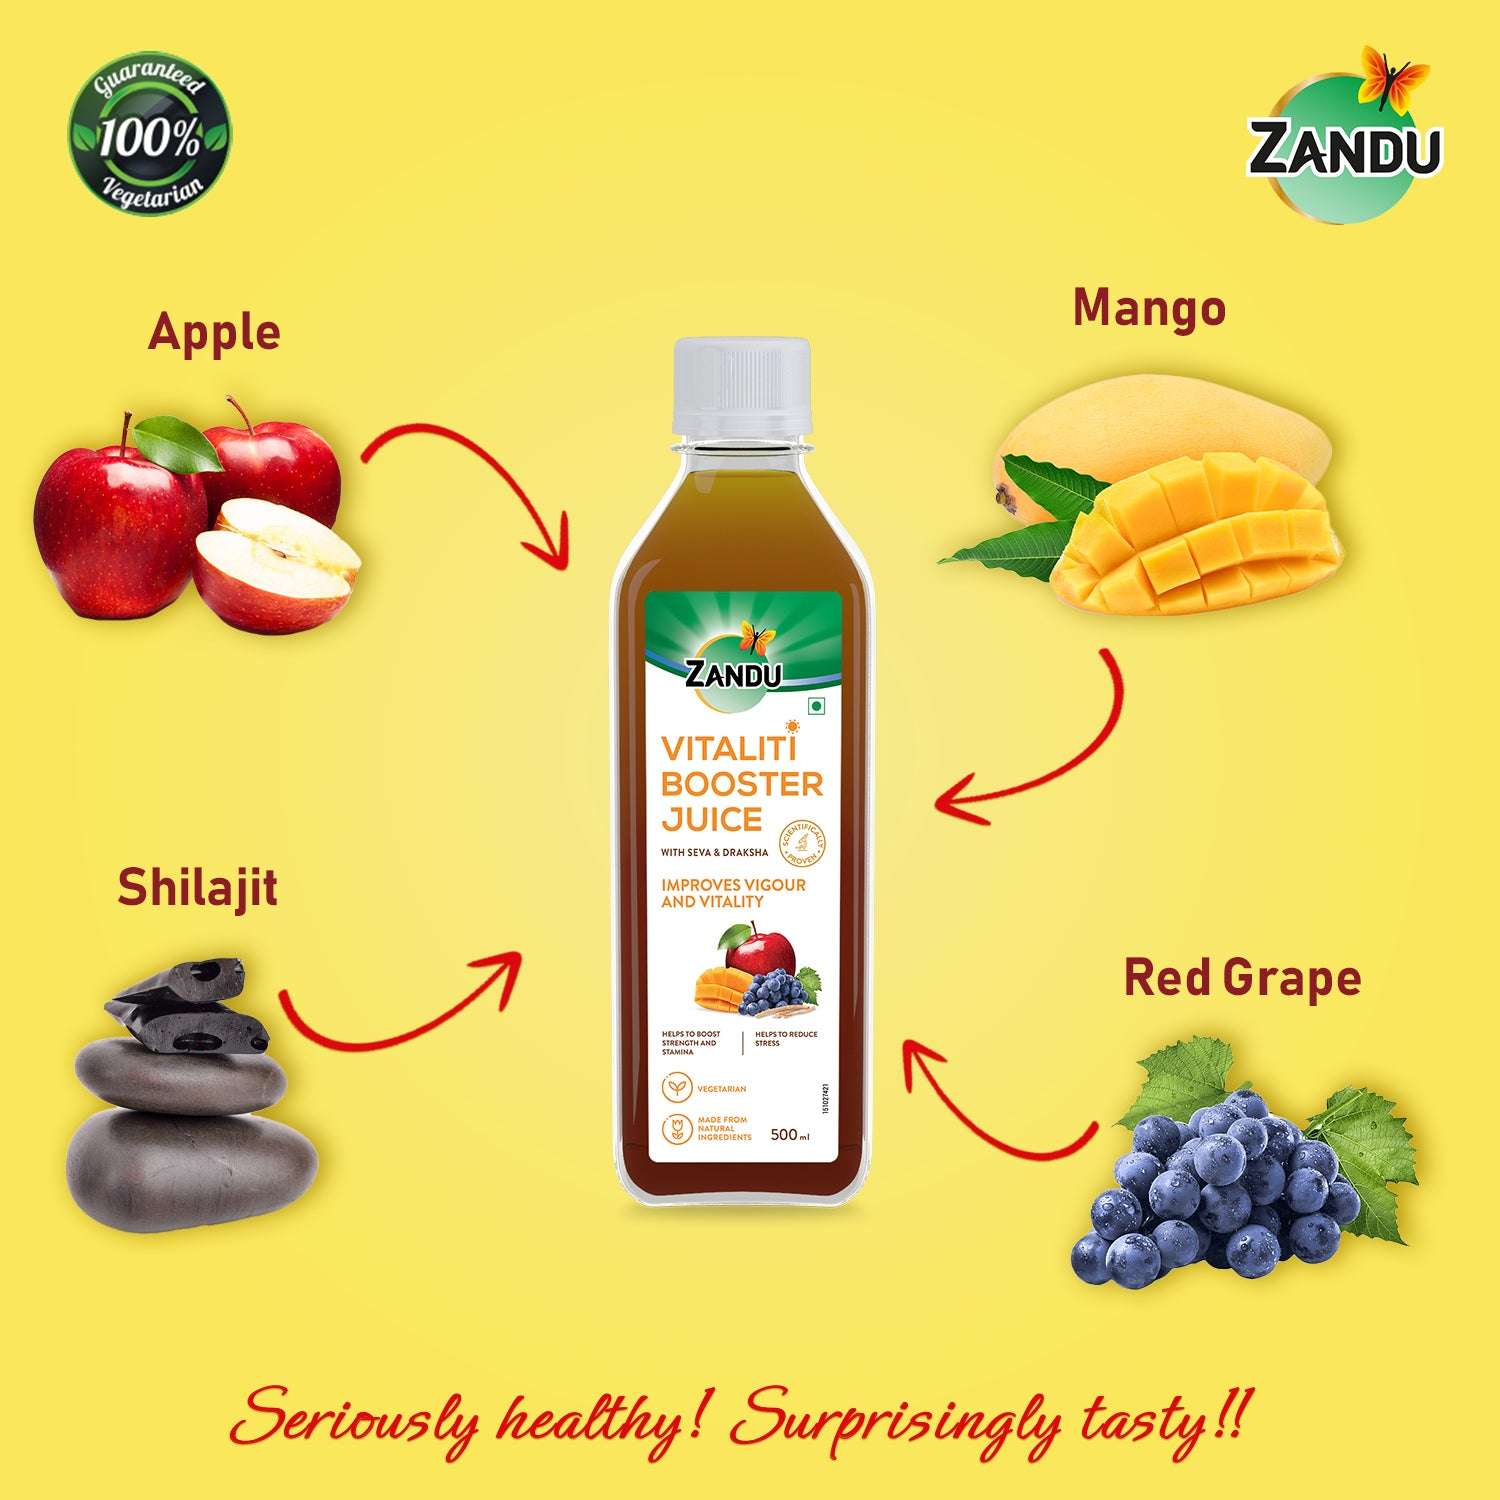 Zandu Vitality Booster Juice Ingredients